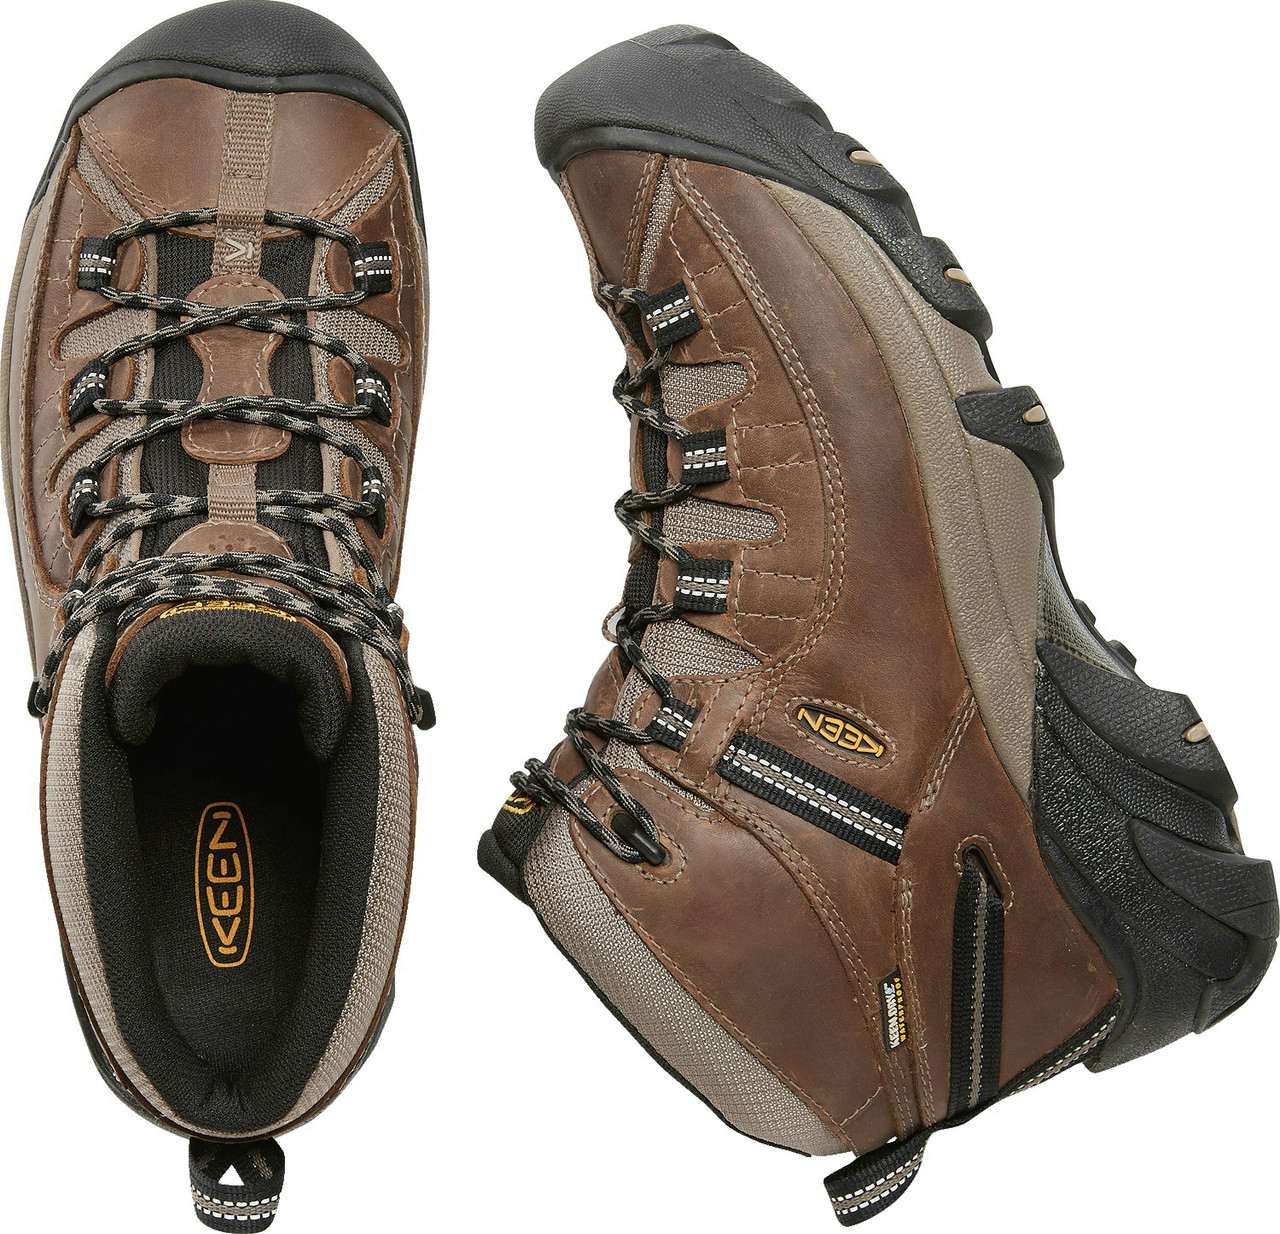 Chaussures de randonnée imperméables Targhee II Shiitake/Brindille